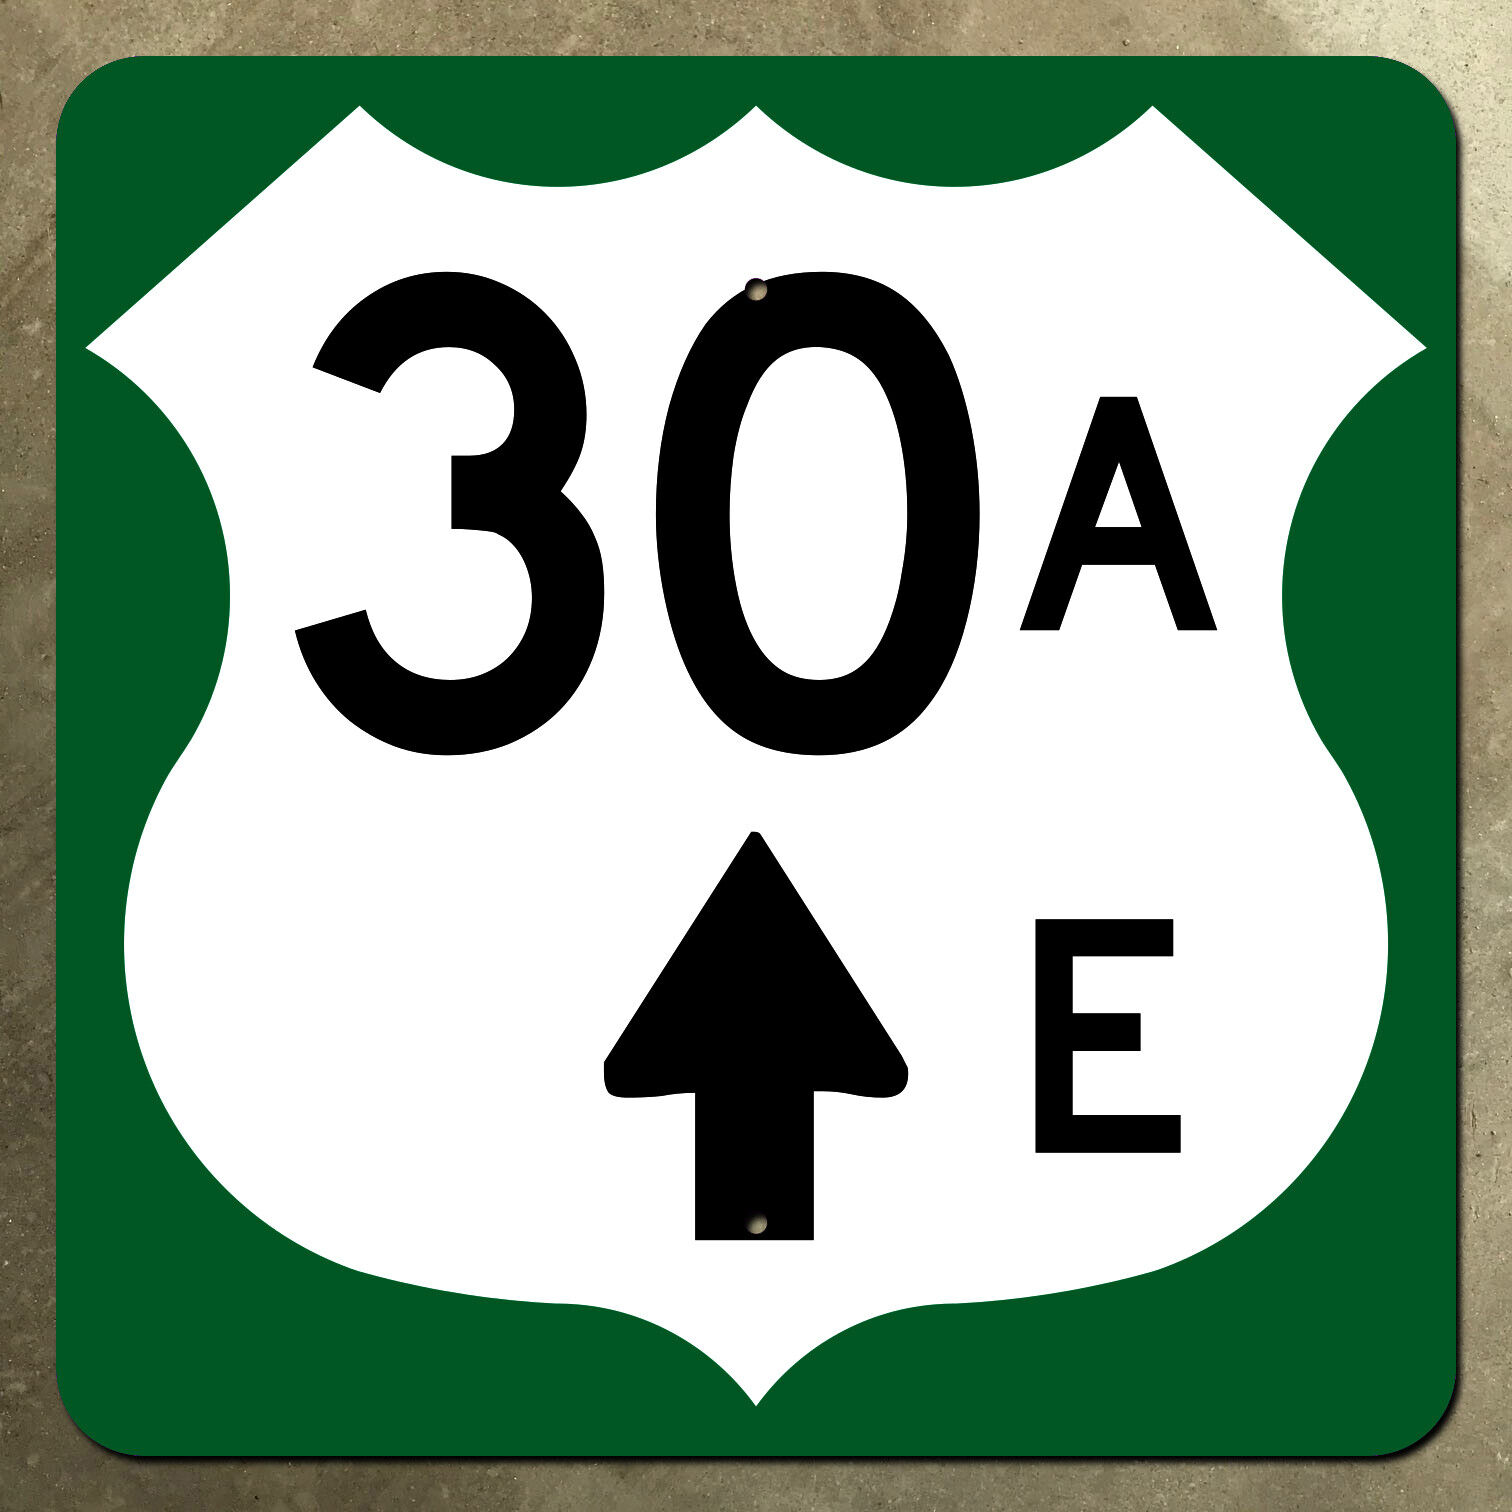 Nebraska US route 30A Lincoln highway marker road sign shield 1961 arrow 16x16